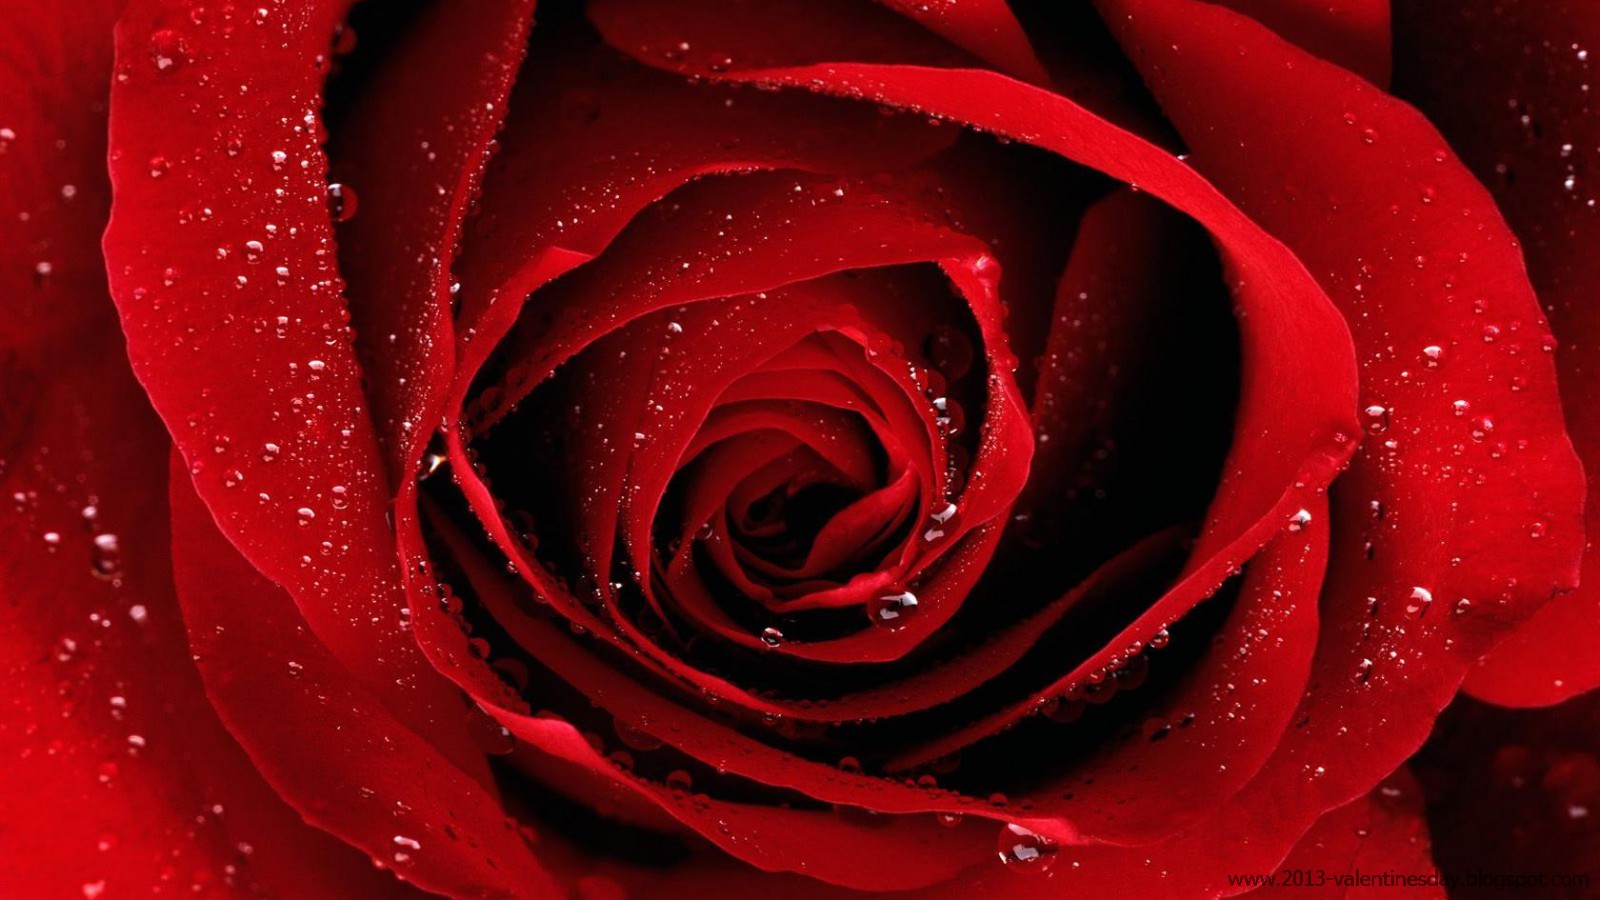 rose wallpaper hd,rose,garden roses,red,petal,flower